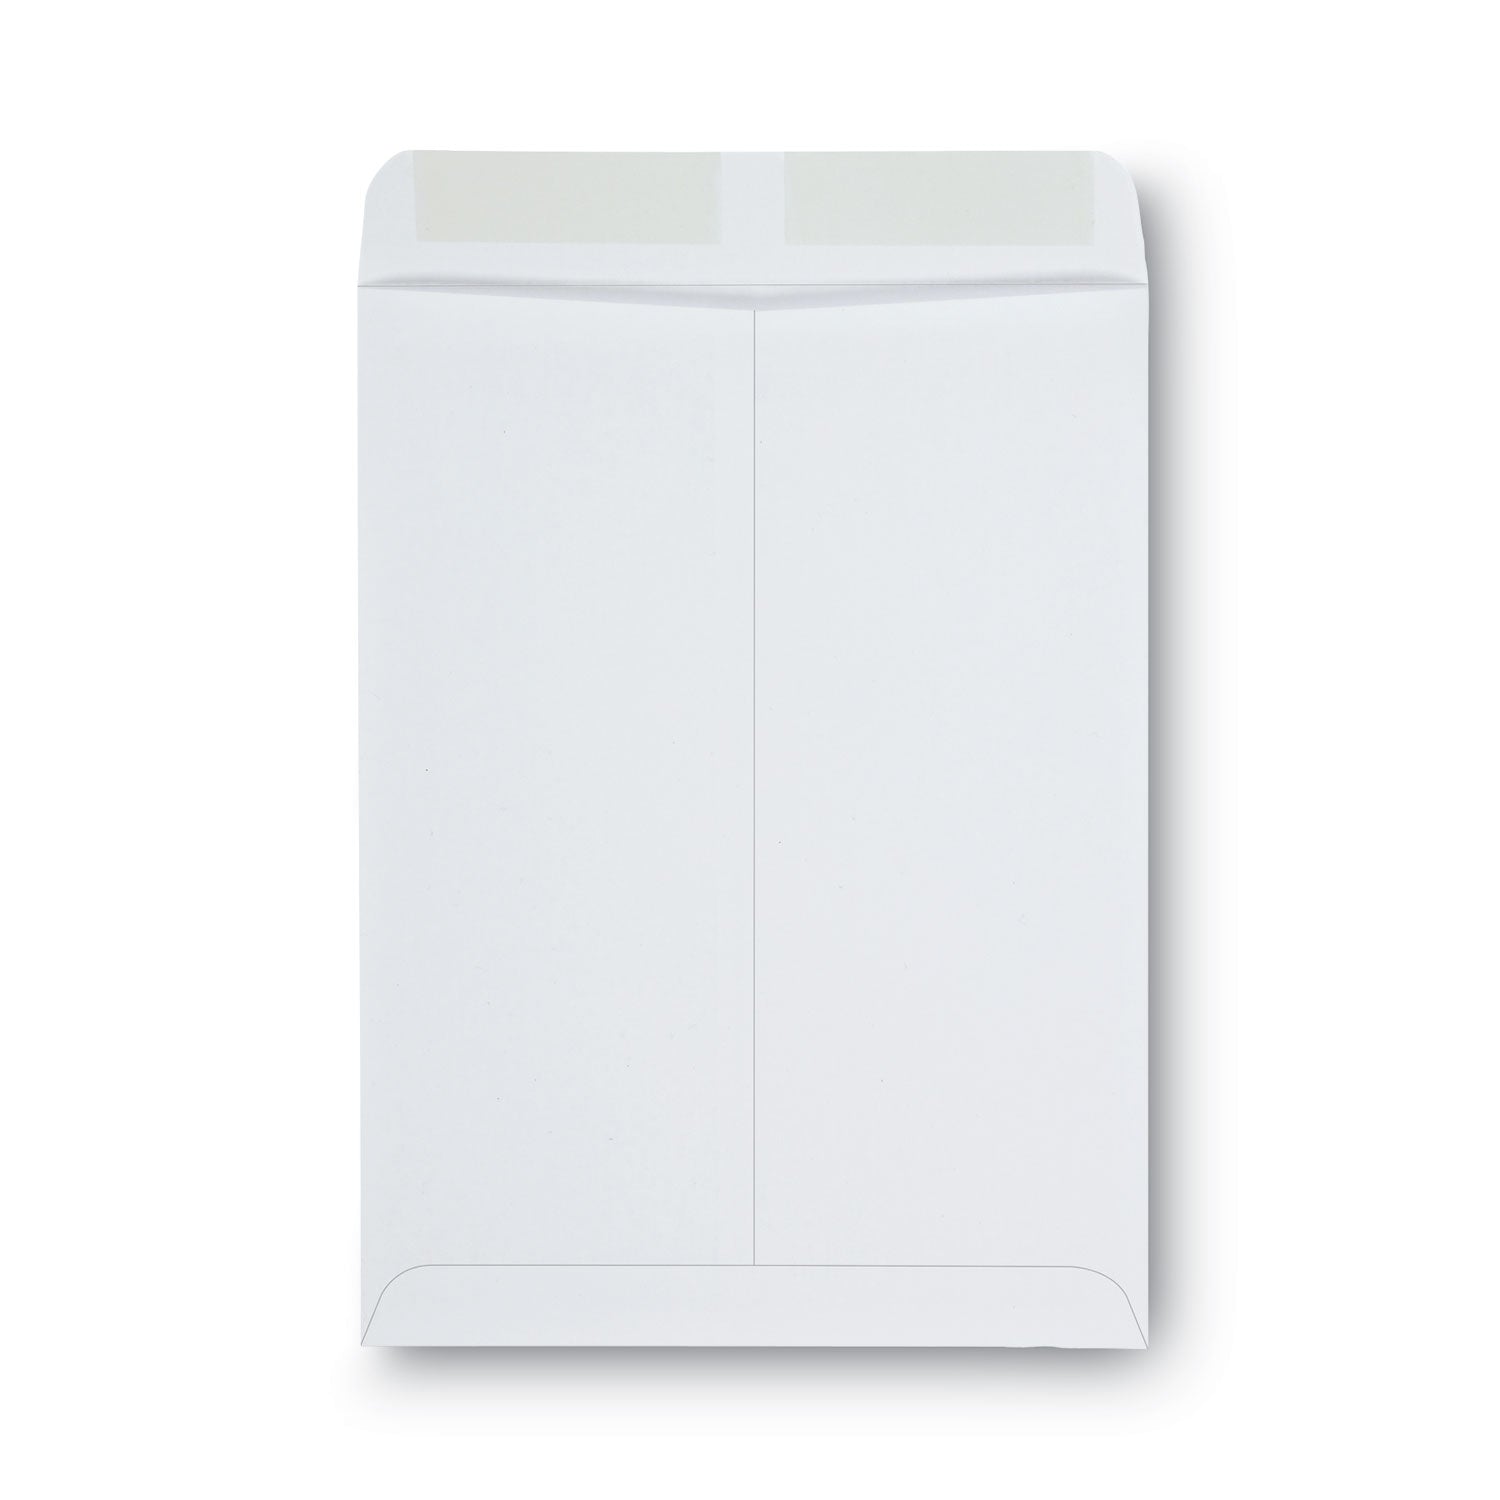 catalog-envelope-28-lb-bond-weight-paper-#10-1-2-square-flap-gummed-closure-9-x-12-white-100-box_unv44103 - 2